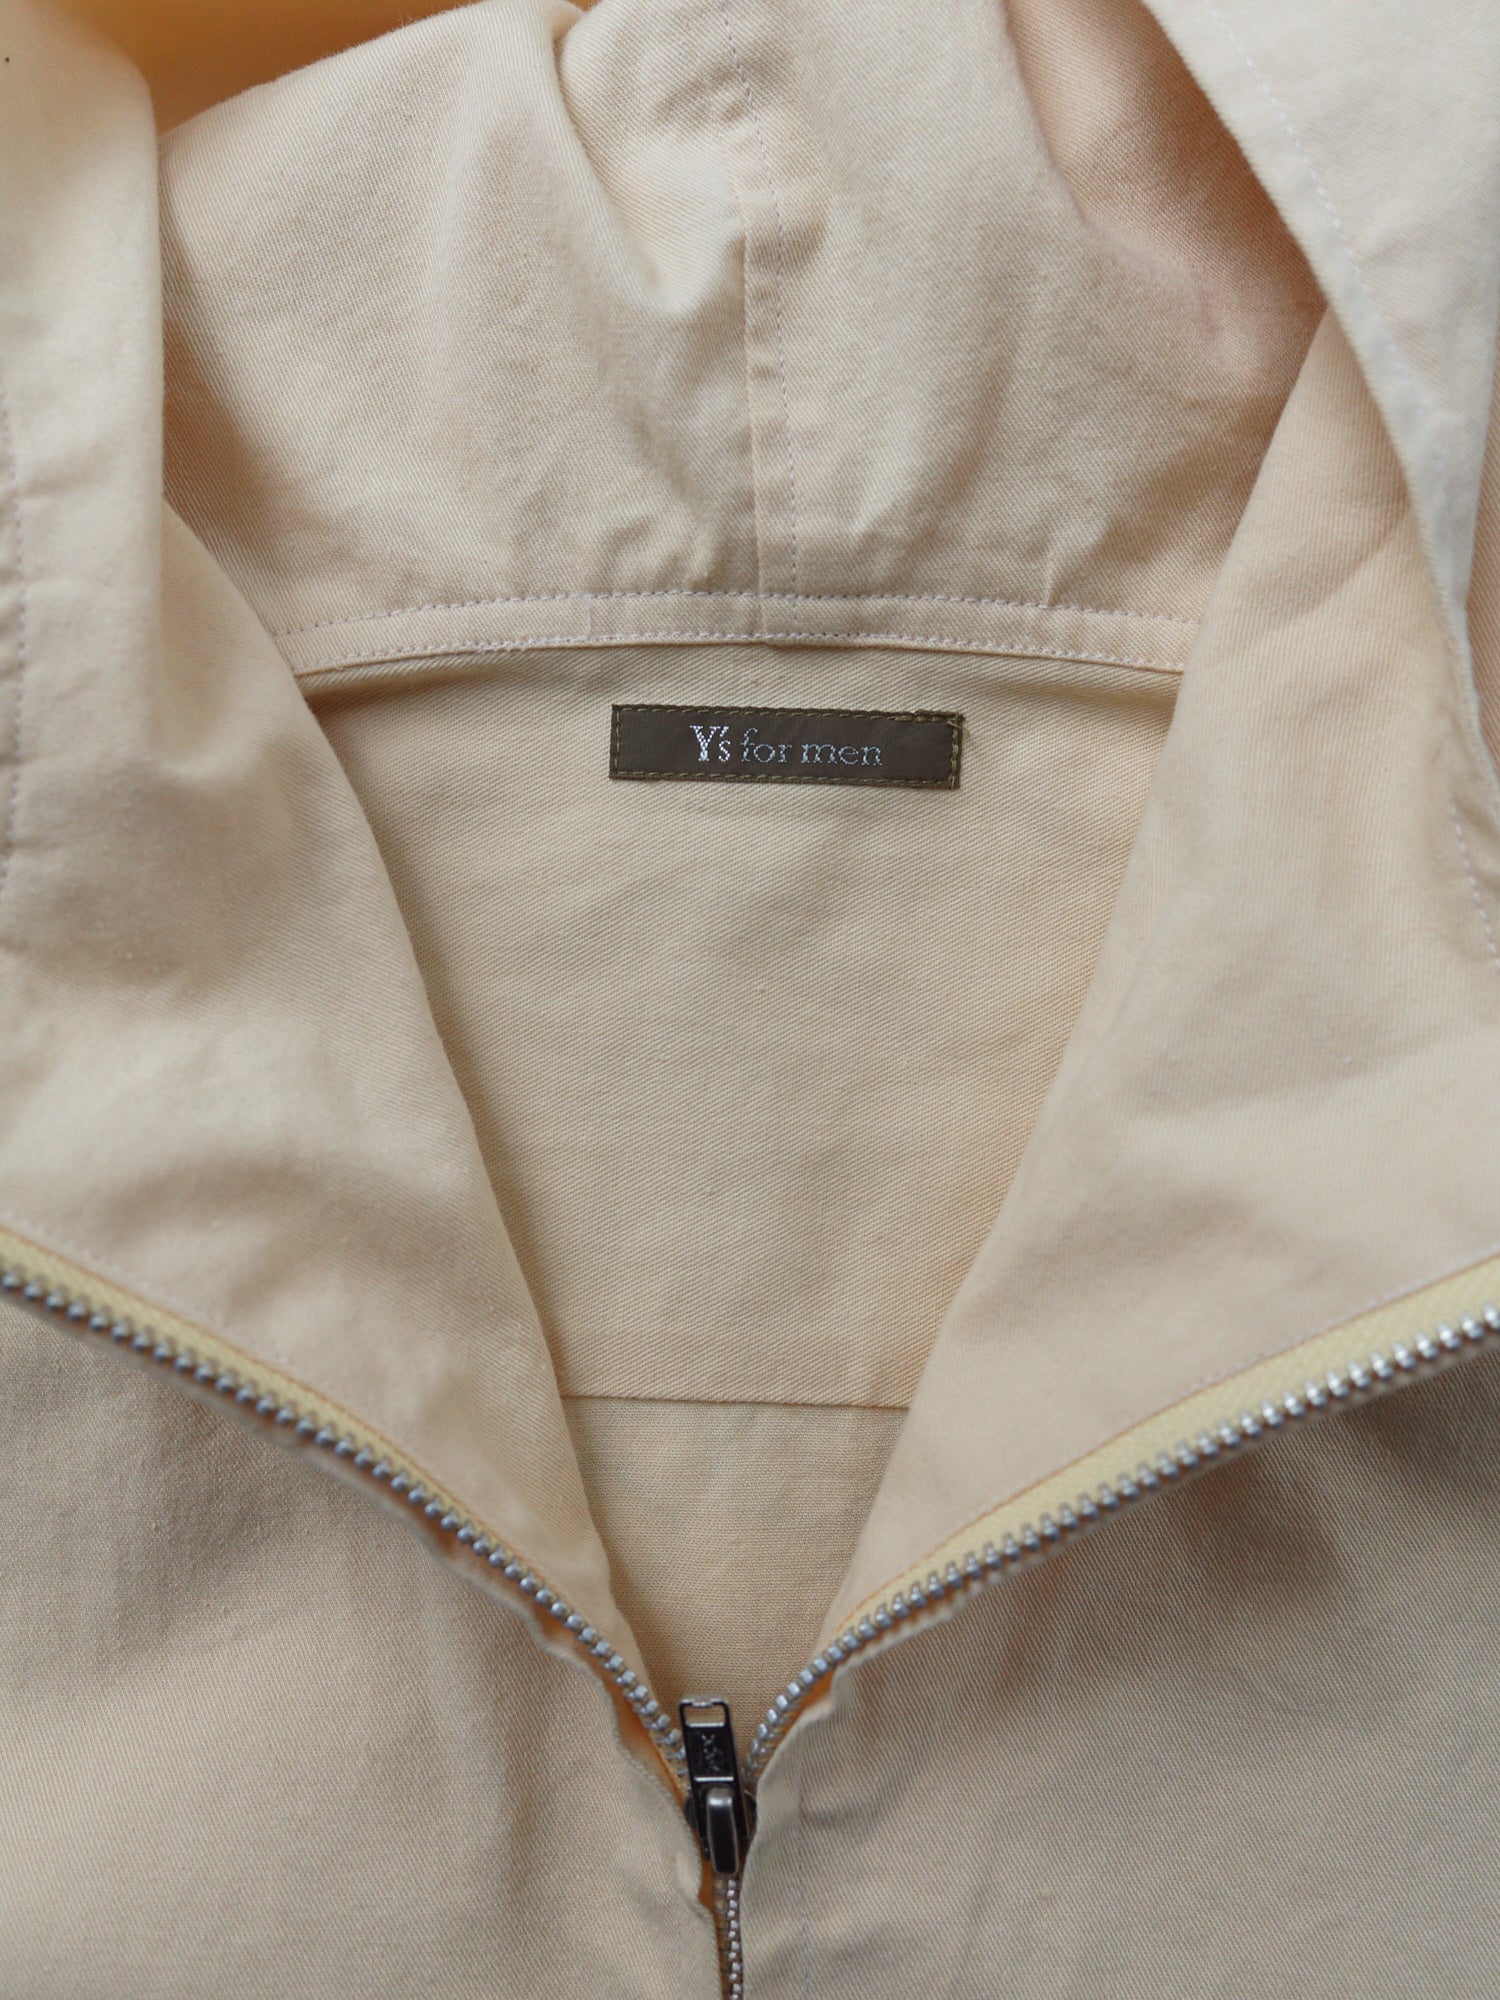 Ys for Men Yohji Yamamoto 1990s yellow cotton zipped hooded shirt jacket - sz L